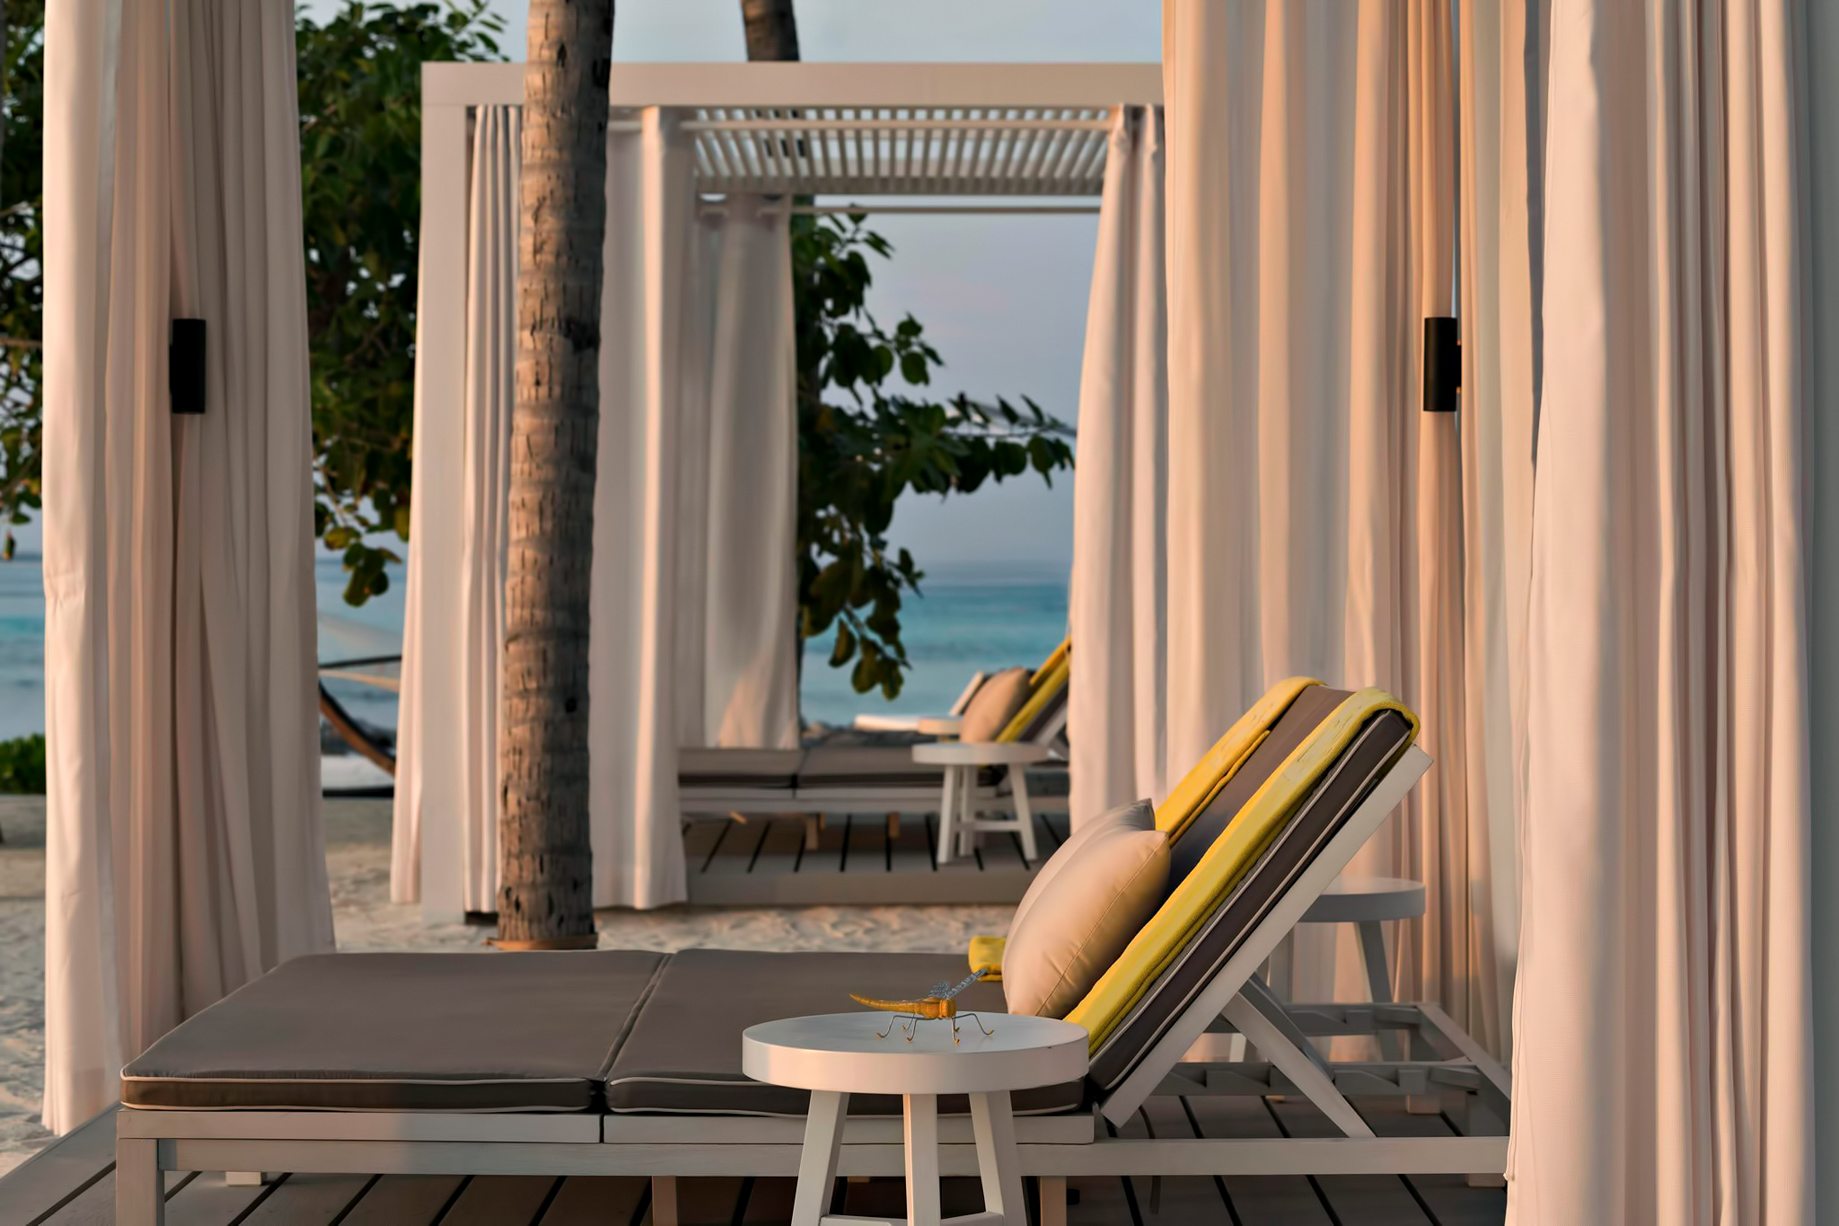 Cheval Blanc Randheli Resort – Noonu Atoll, Maldives – Beach Club Lounge Chairs Sunset